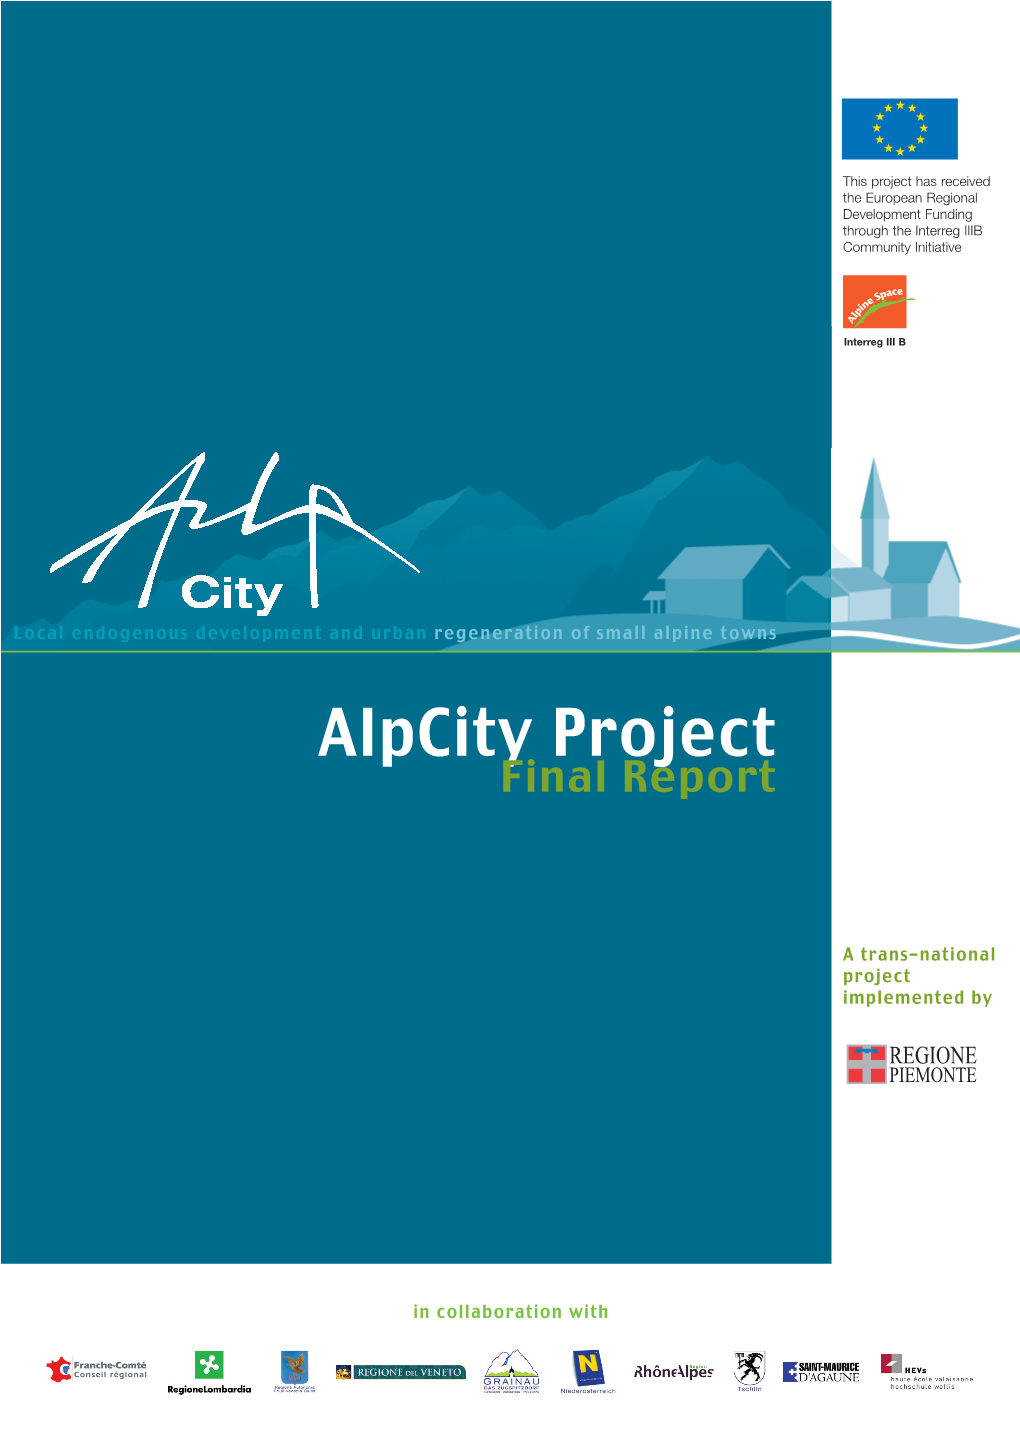 Alpcity Project Final Report